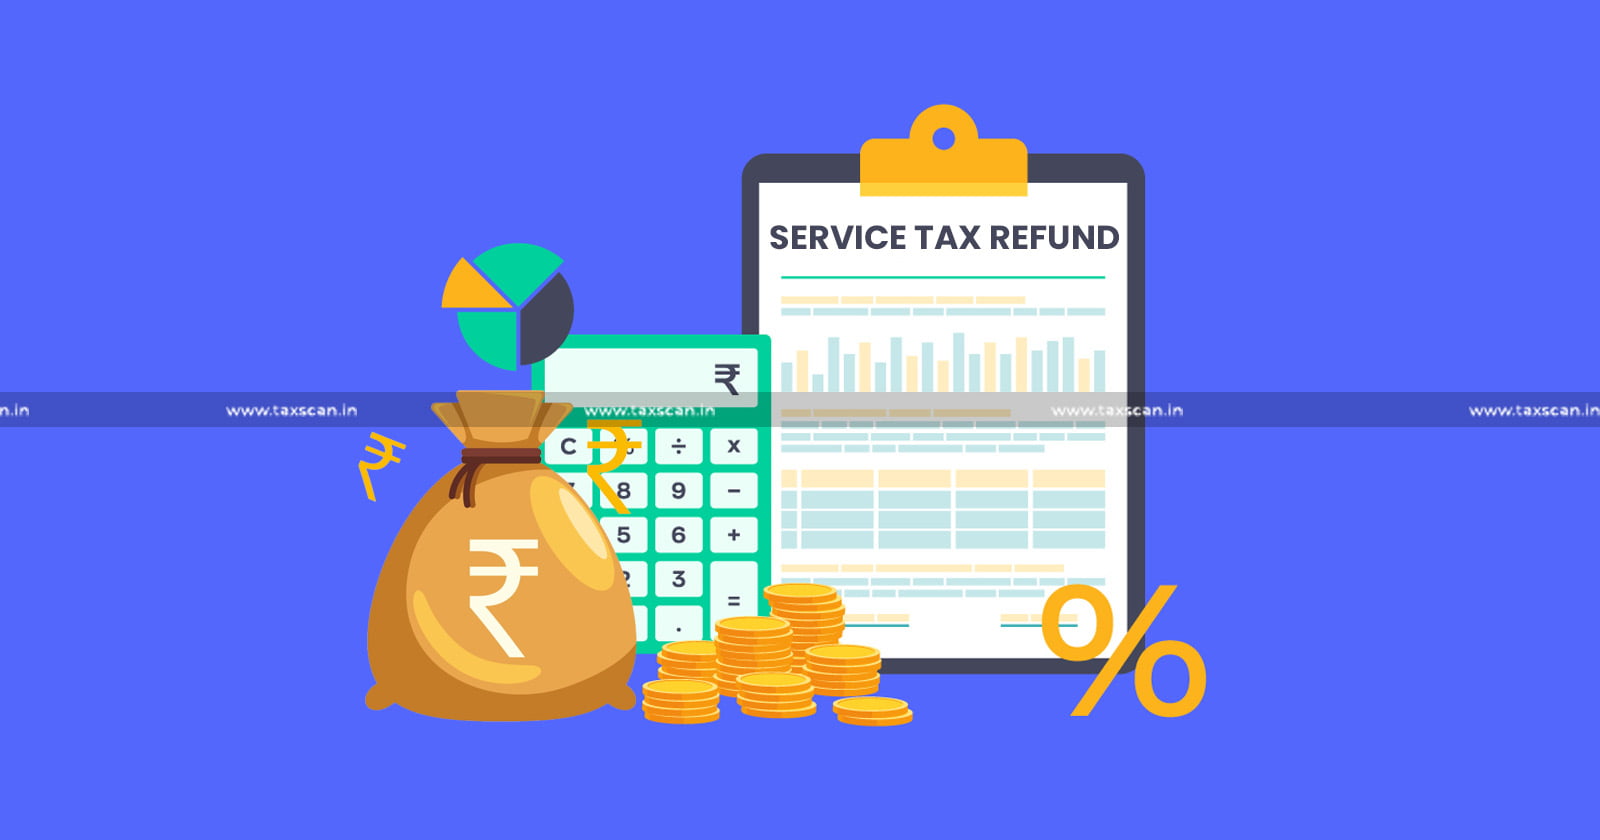 No records to prove - Availment of Cenvat Credit - Service Tax Refund - Service Tax - Refund - Claim - Refund Claim - CESTAT - Re-adjudication - Taxscan